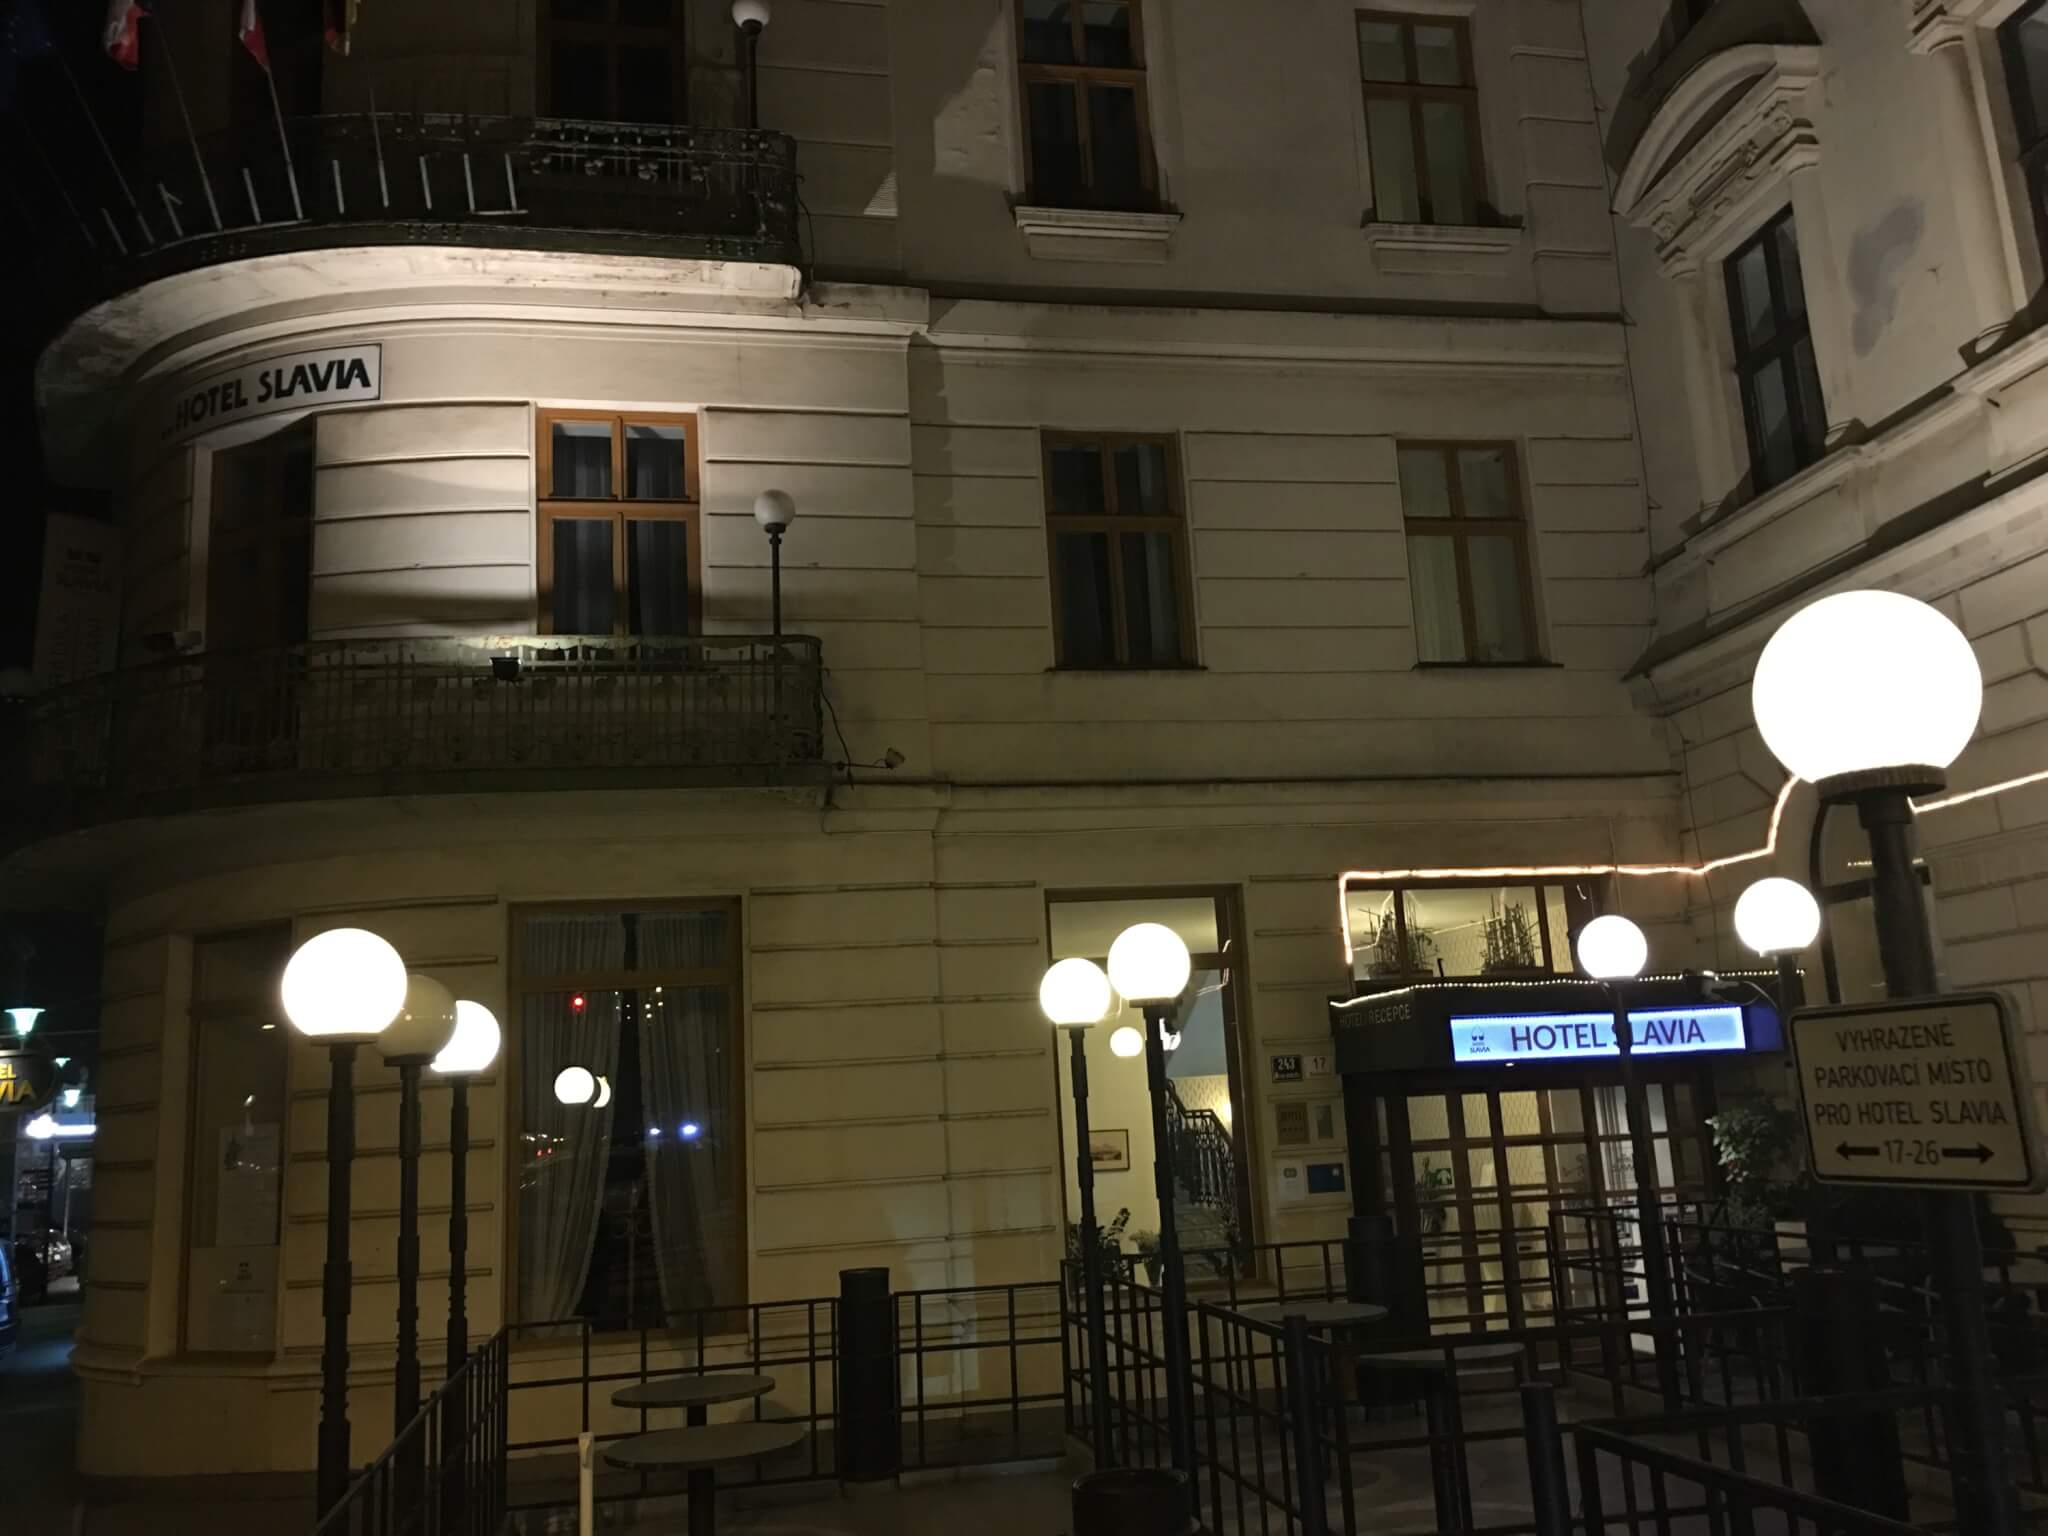 Hotel Slavia, Brno